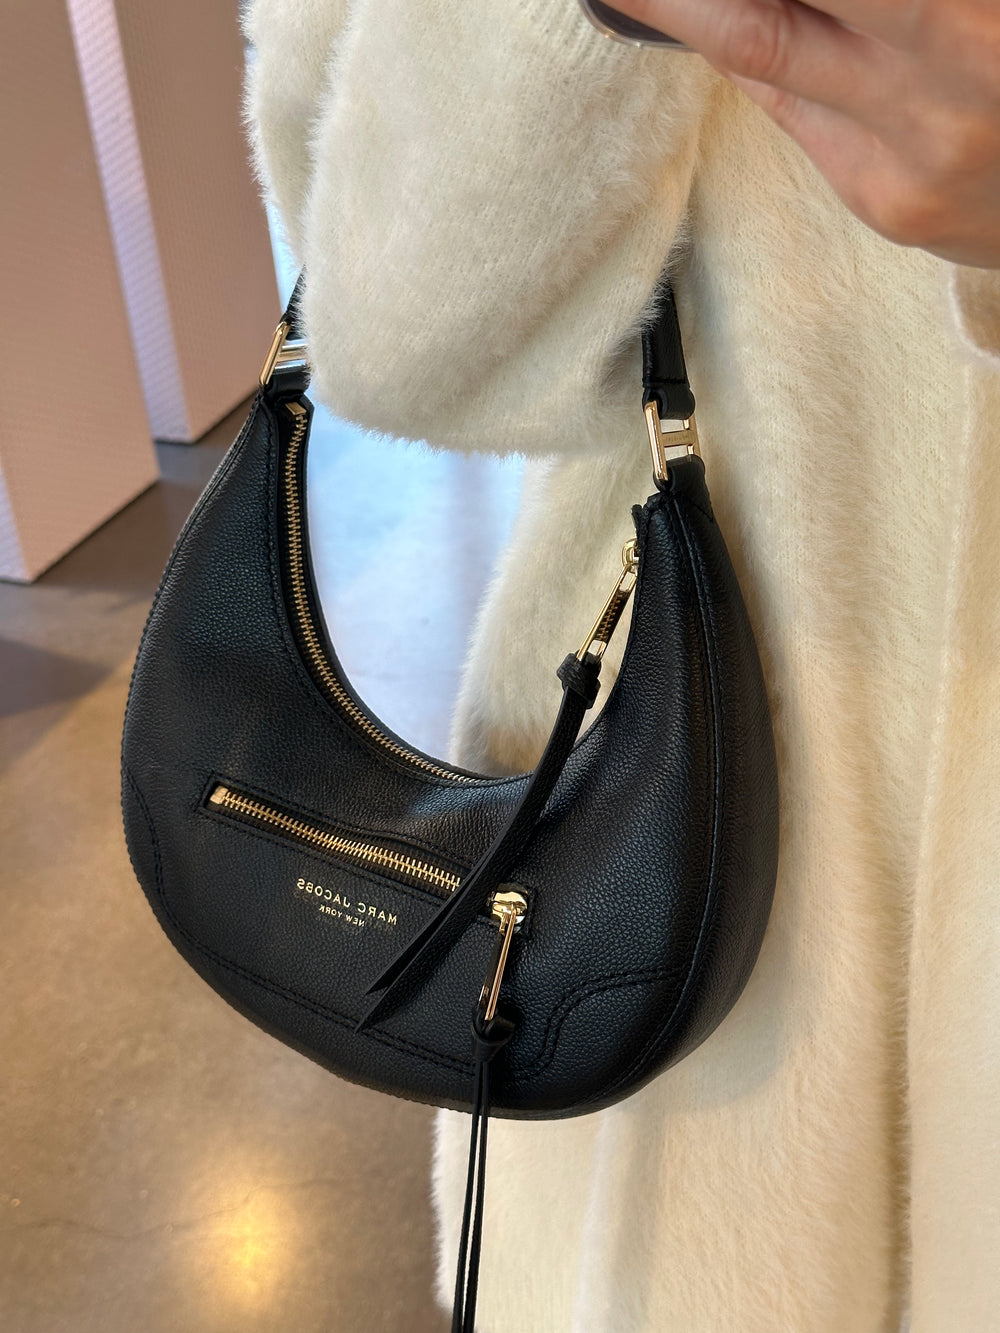 Marc Jacobs Pillow Bag Reveal